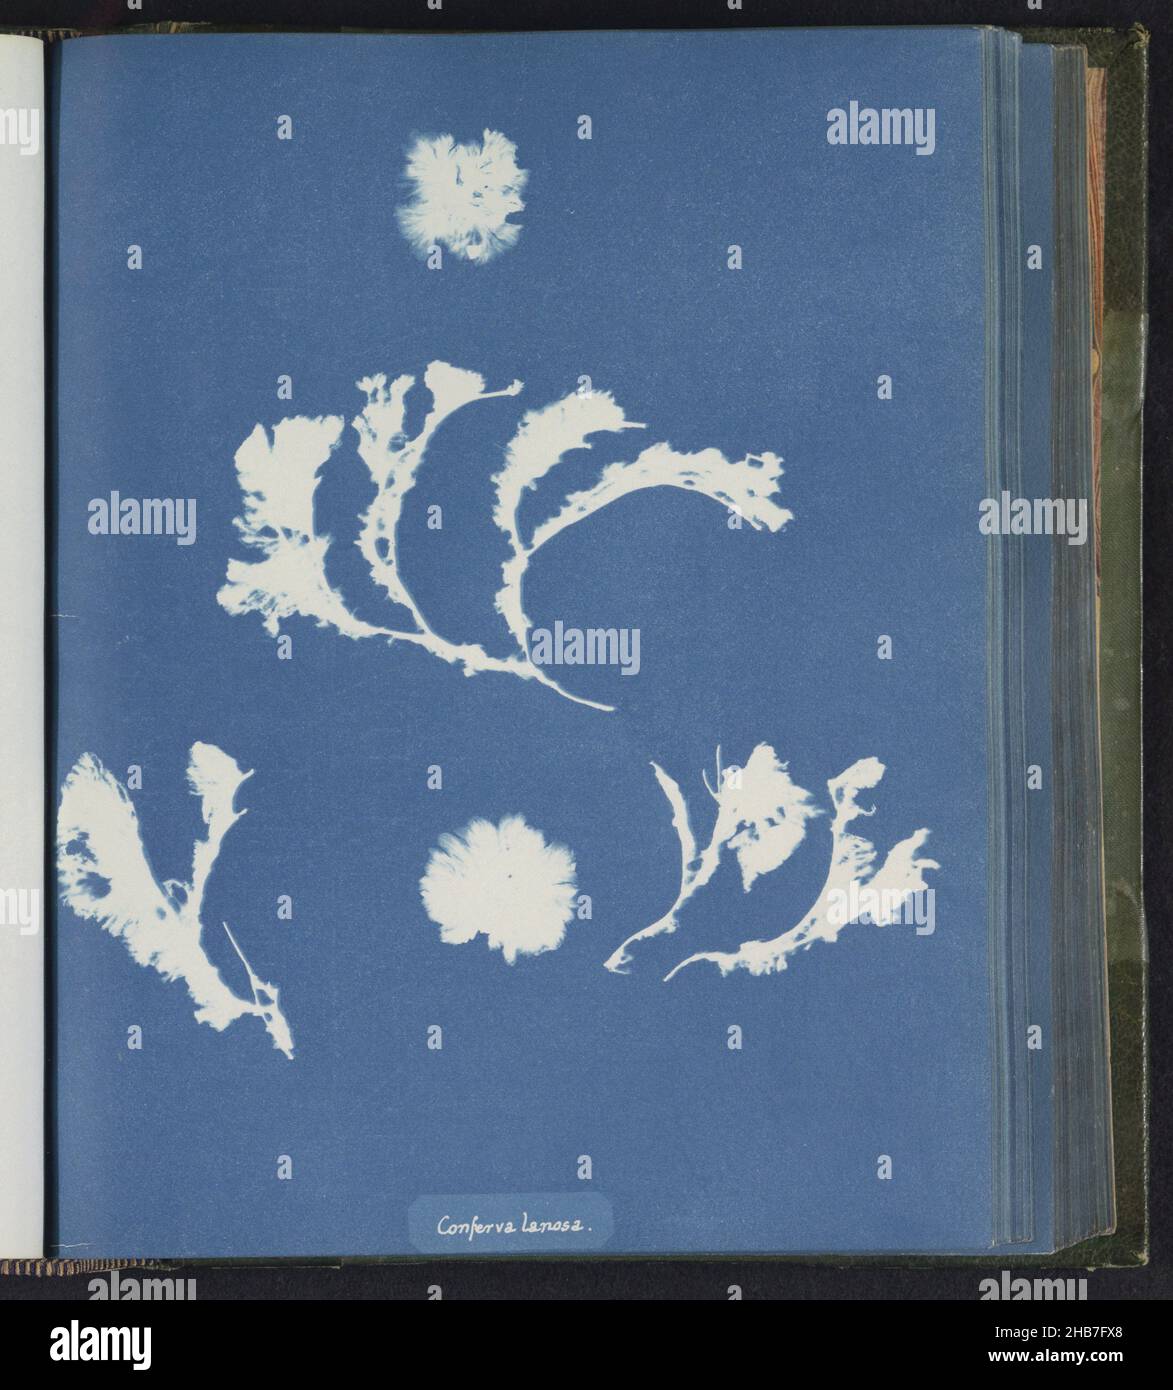 Conferva Lanosa, Anna Atkins, United Kingdom, c. 1843 - c. 1853, photographic support, cyanotype, height 250 mm × width 200 mm Stock Photo